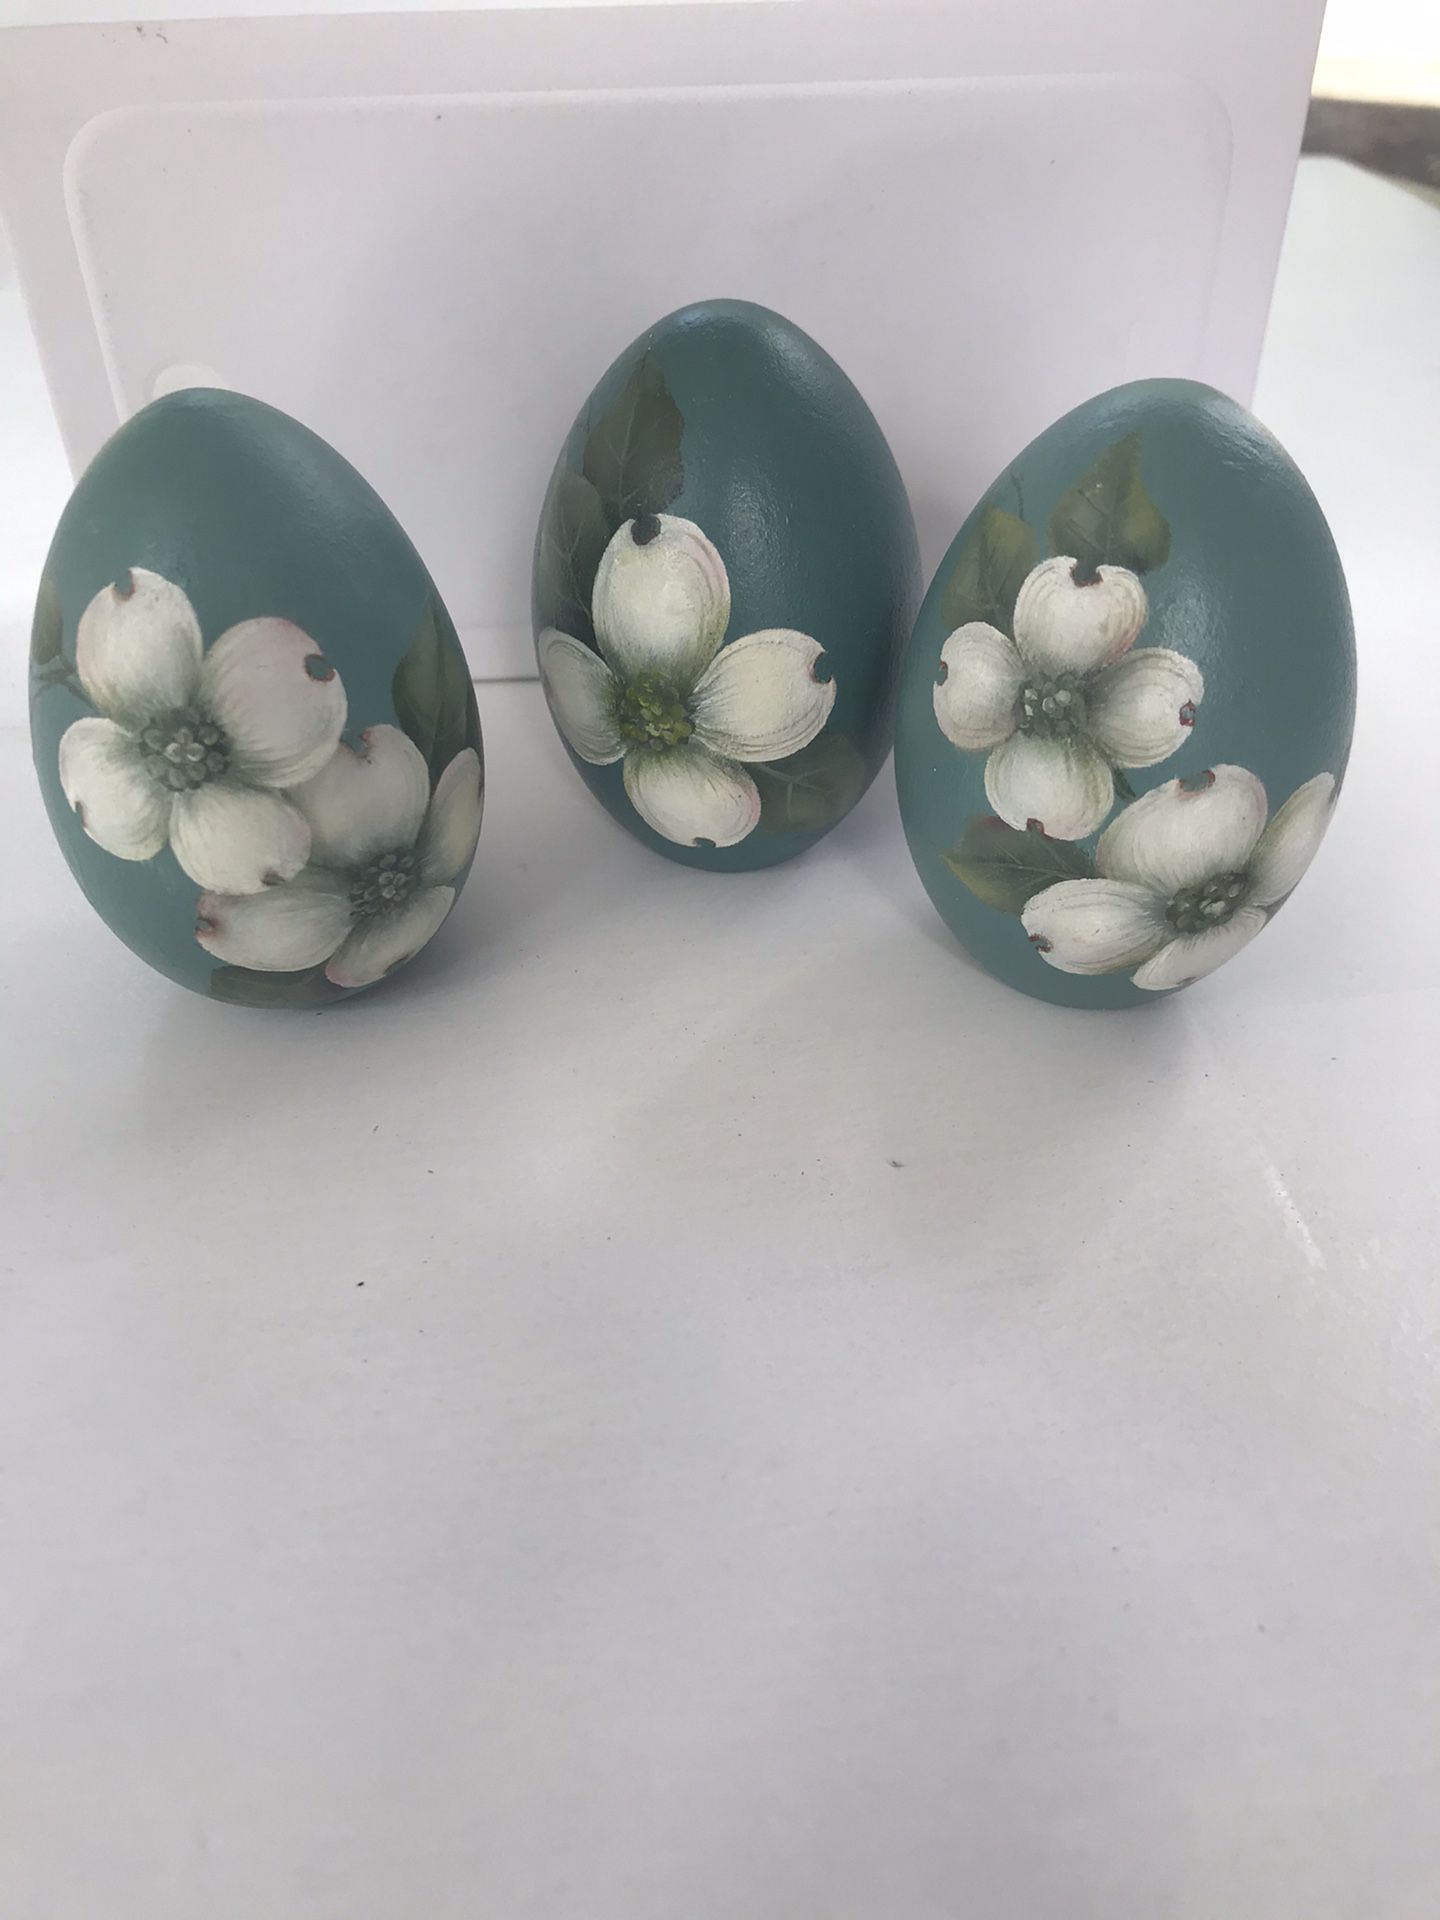 Decorative wooden eggs